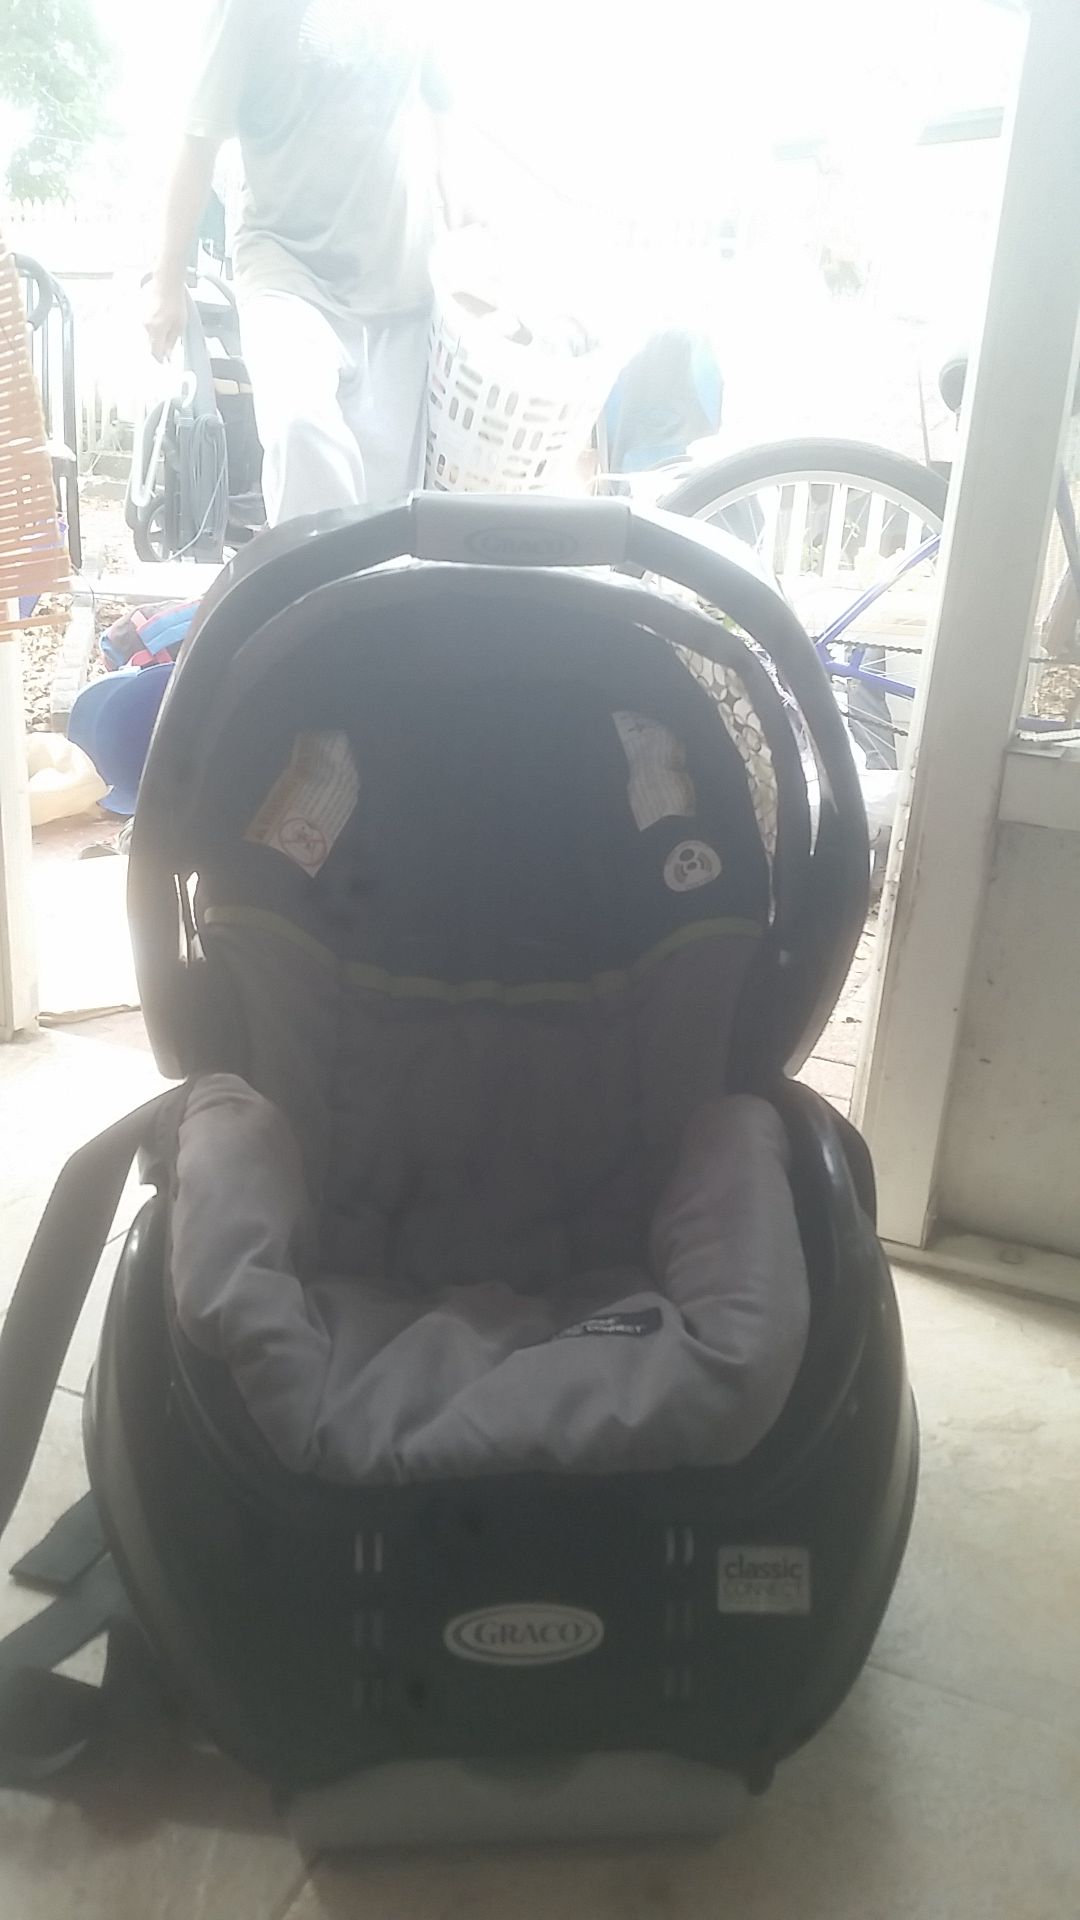 GRACO baby car seat.